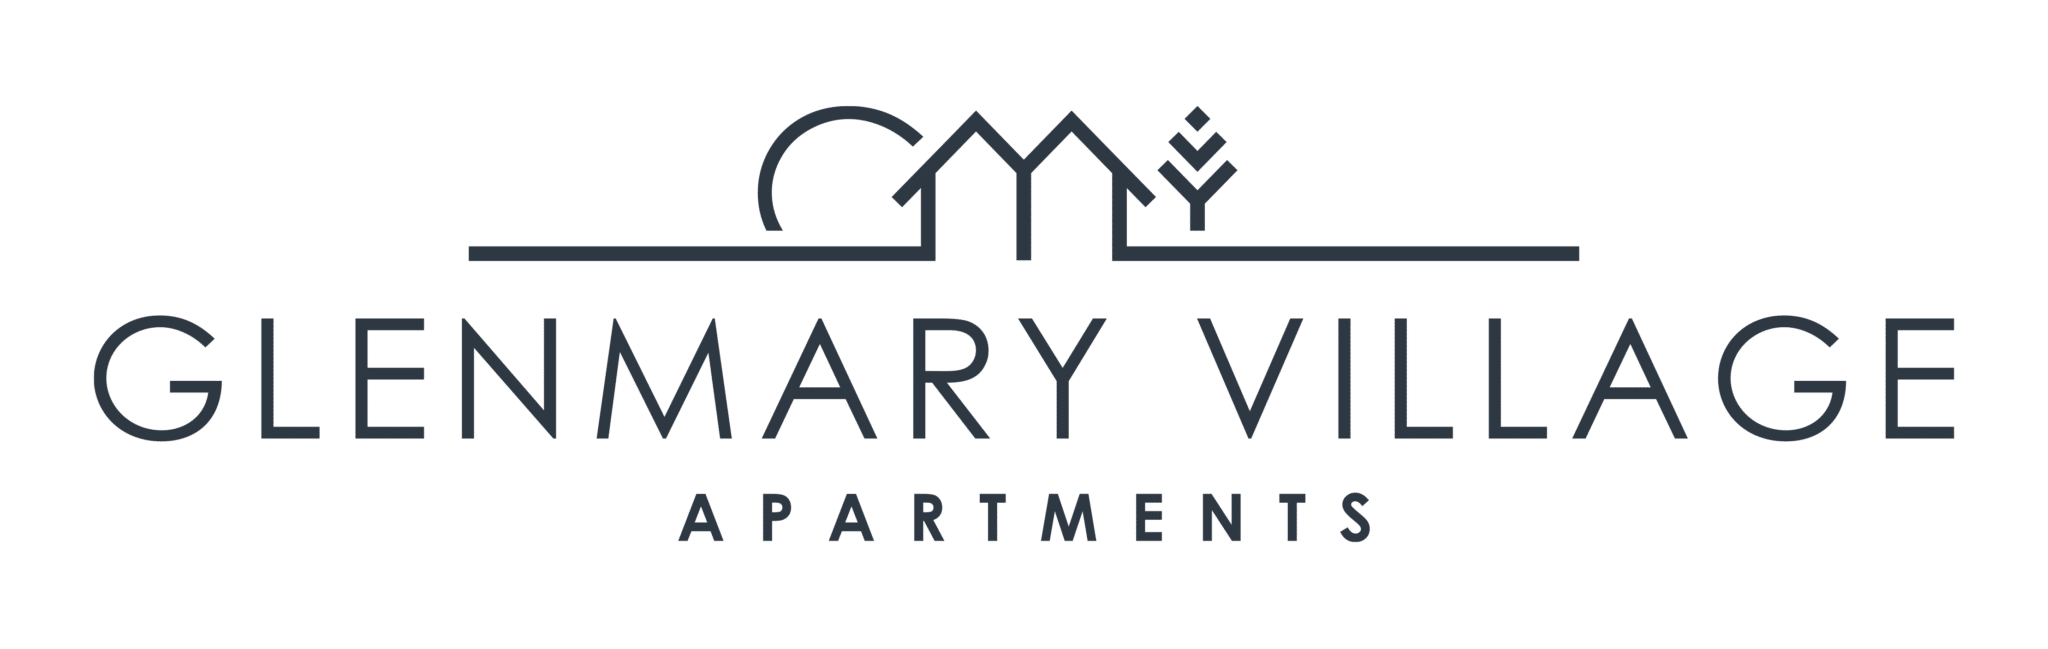 Glenmary Village Apartments Logo